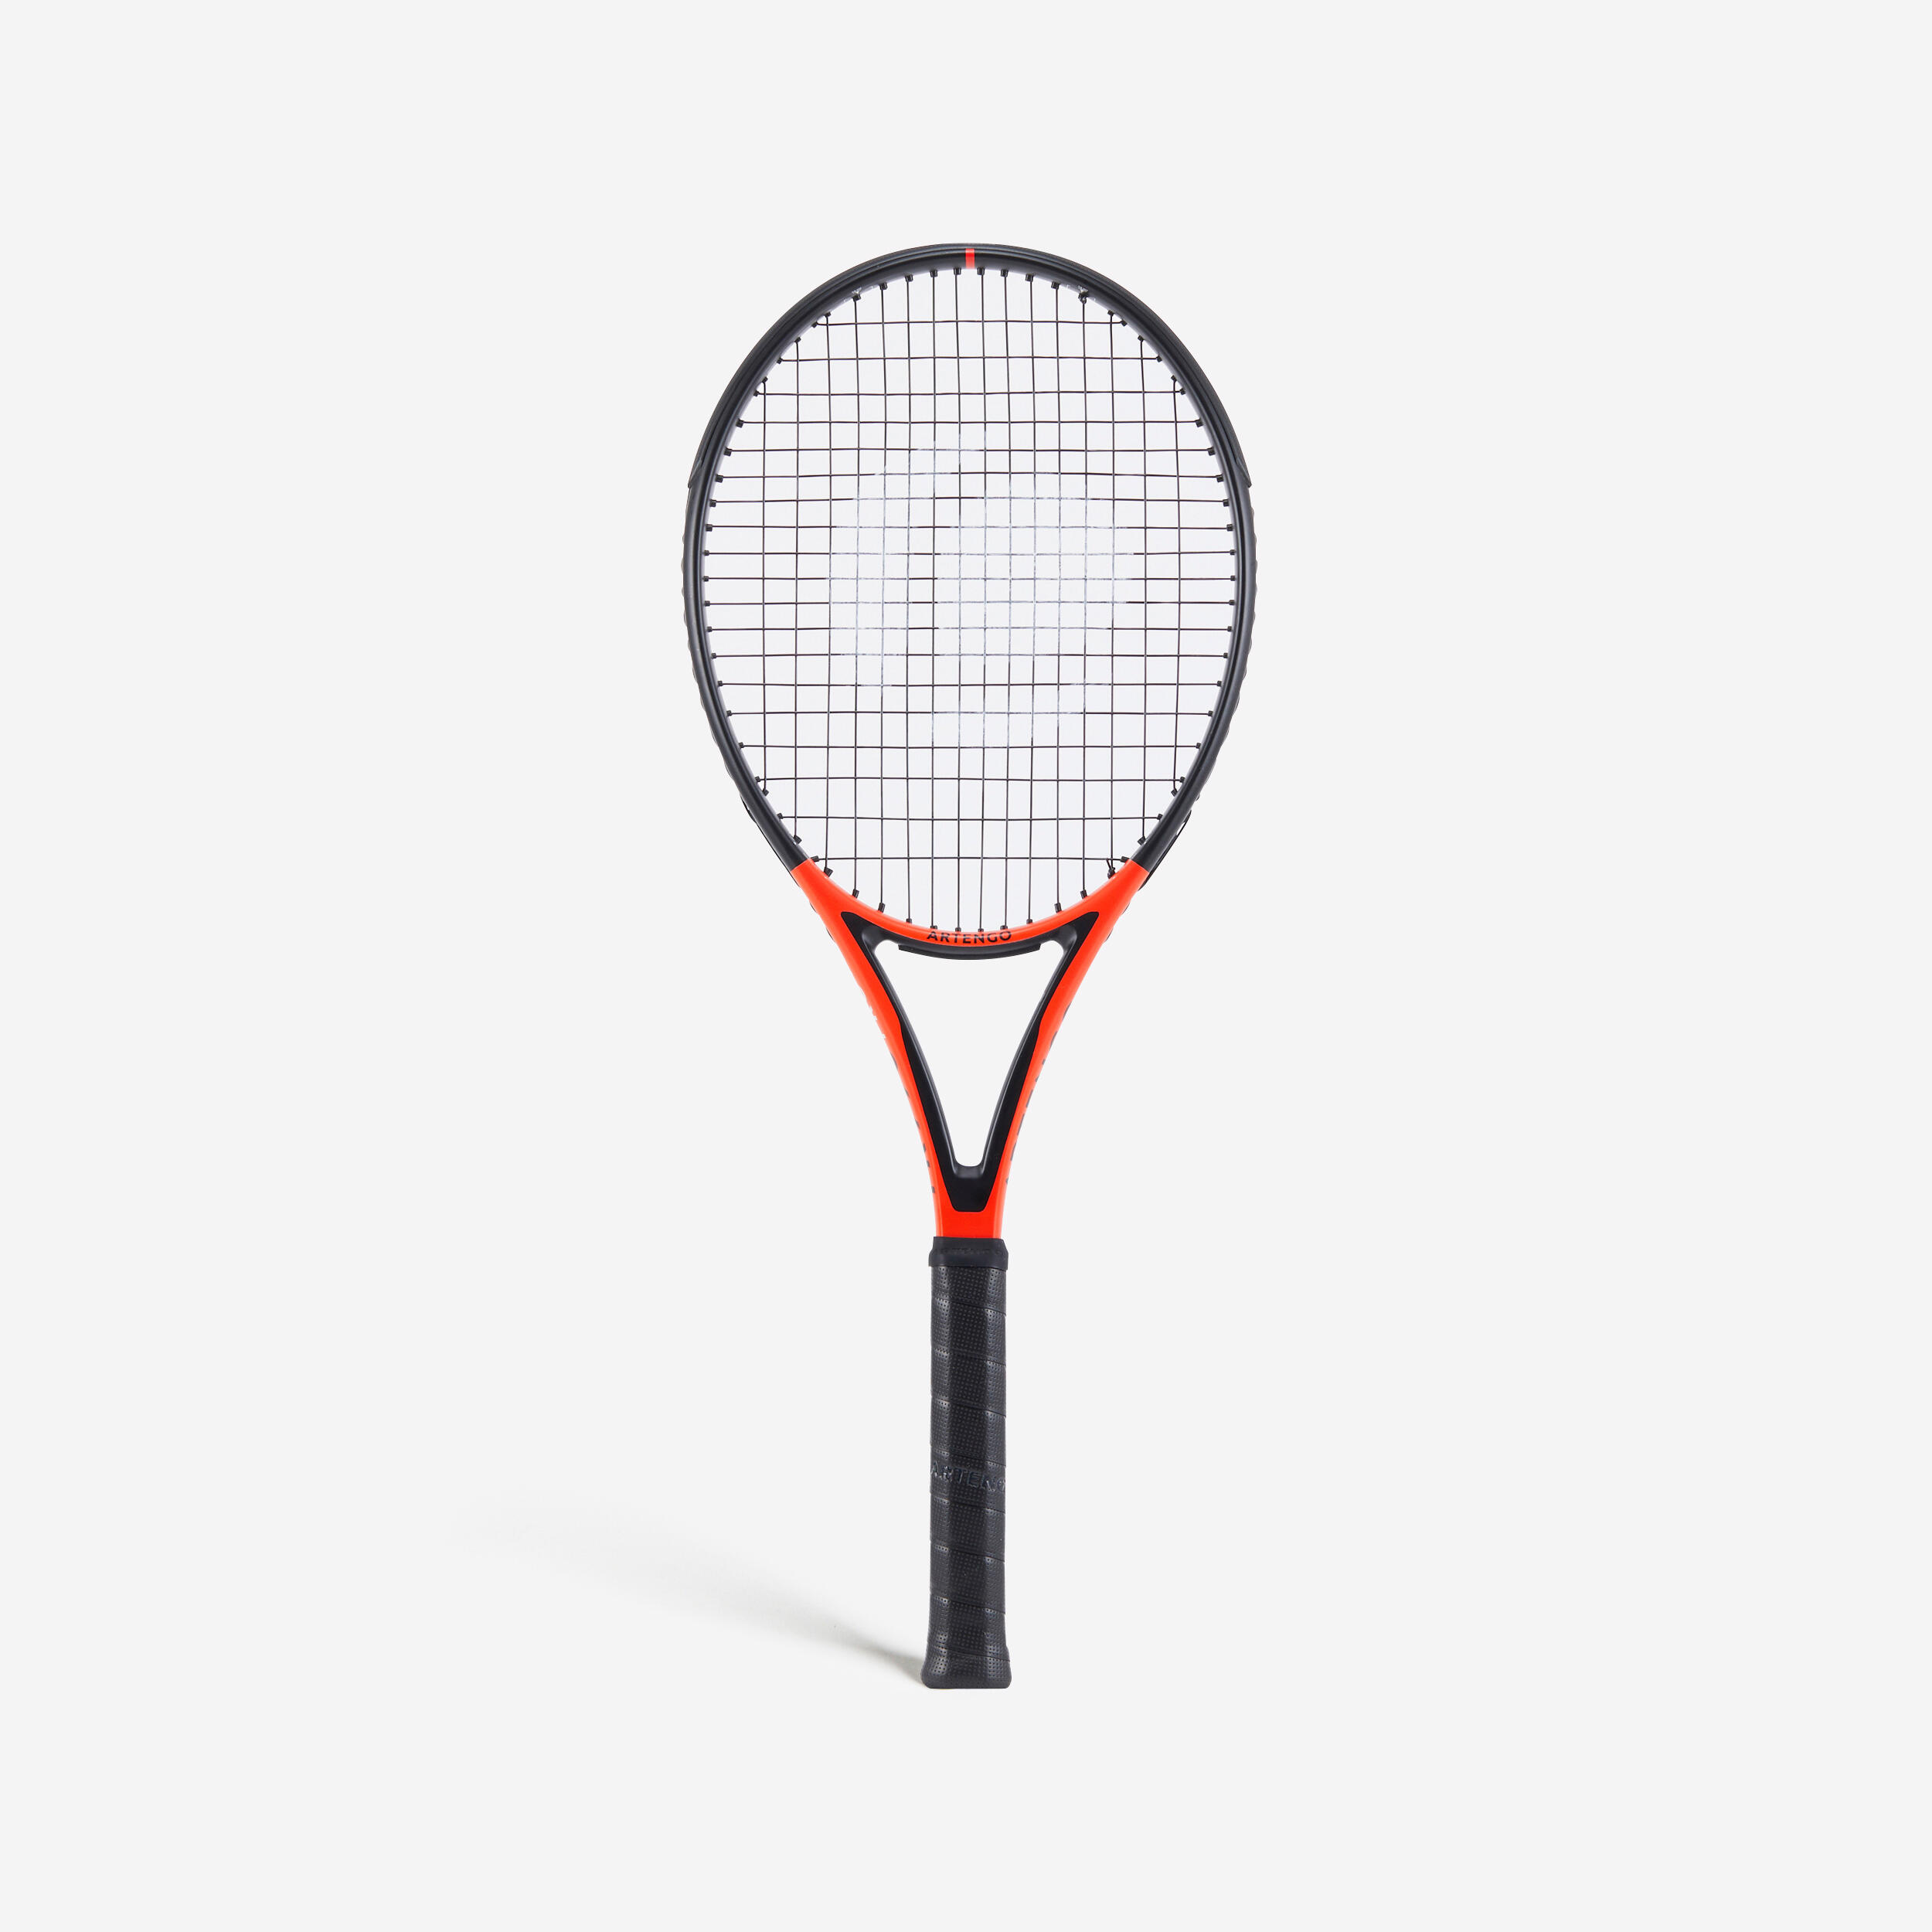 Rachetă Tenis TR990 Power Pro+ 300g Roșu-Negru Adulți 300g  Rachete de tenis